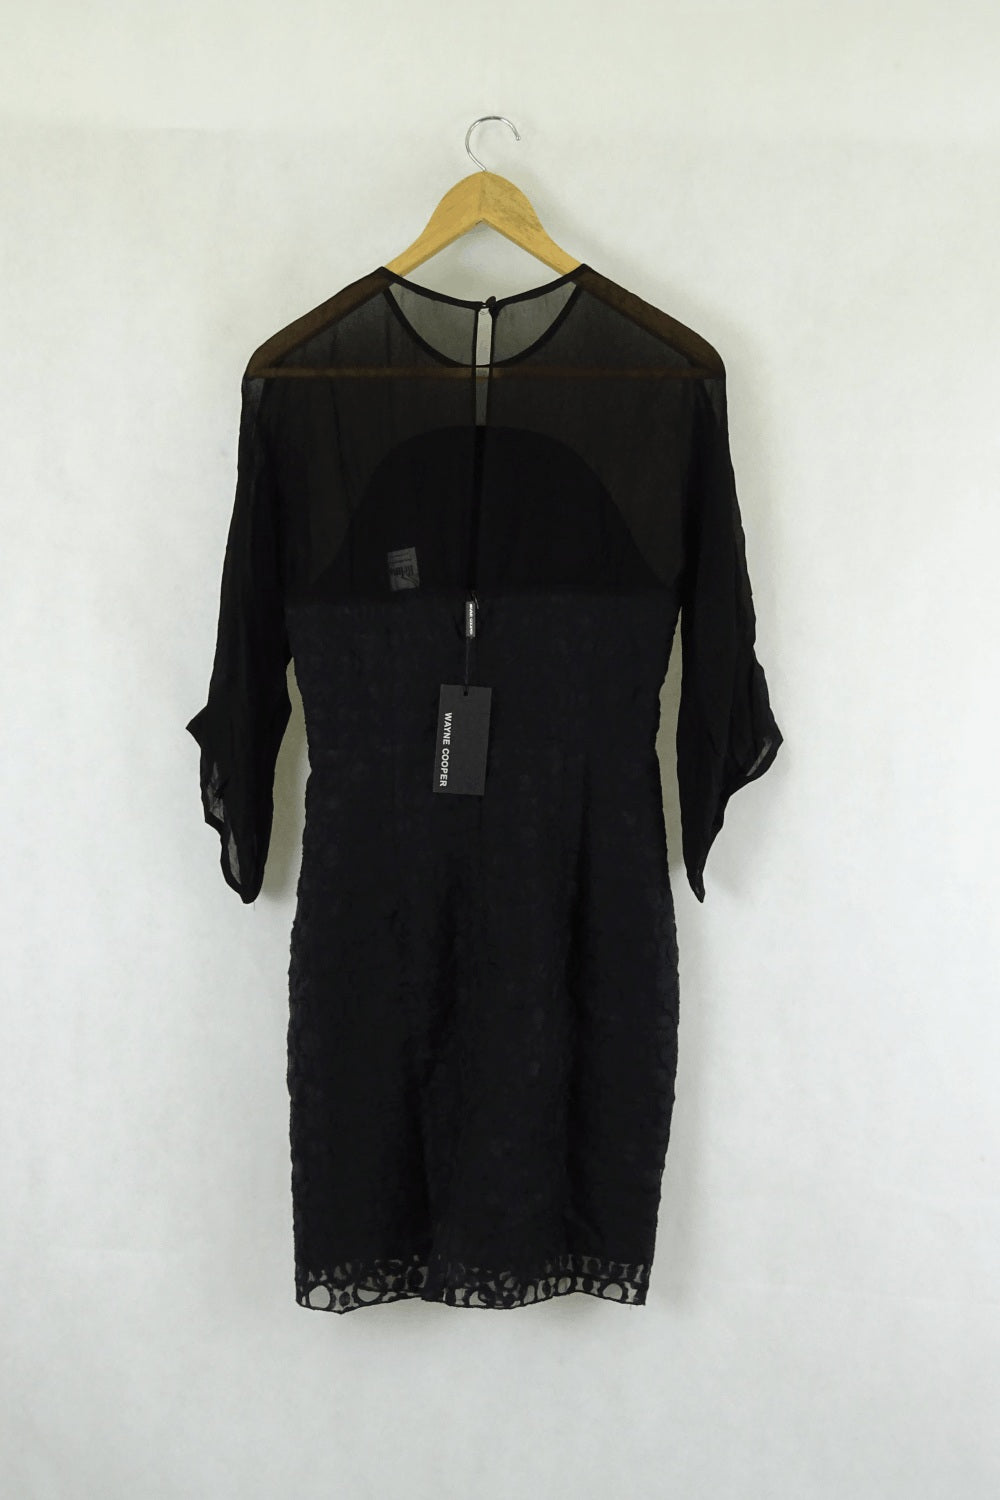 Wayne Cooper Black Long Sleeve Embroidered Dress 1 (Au 10)